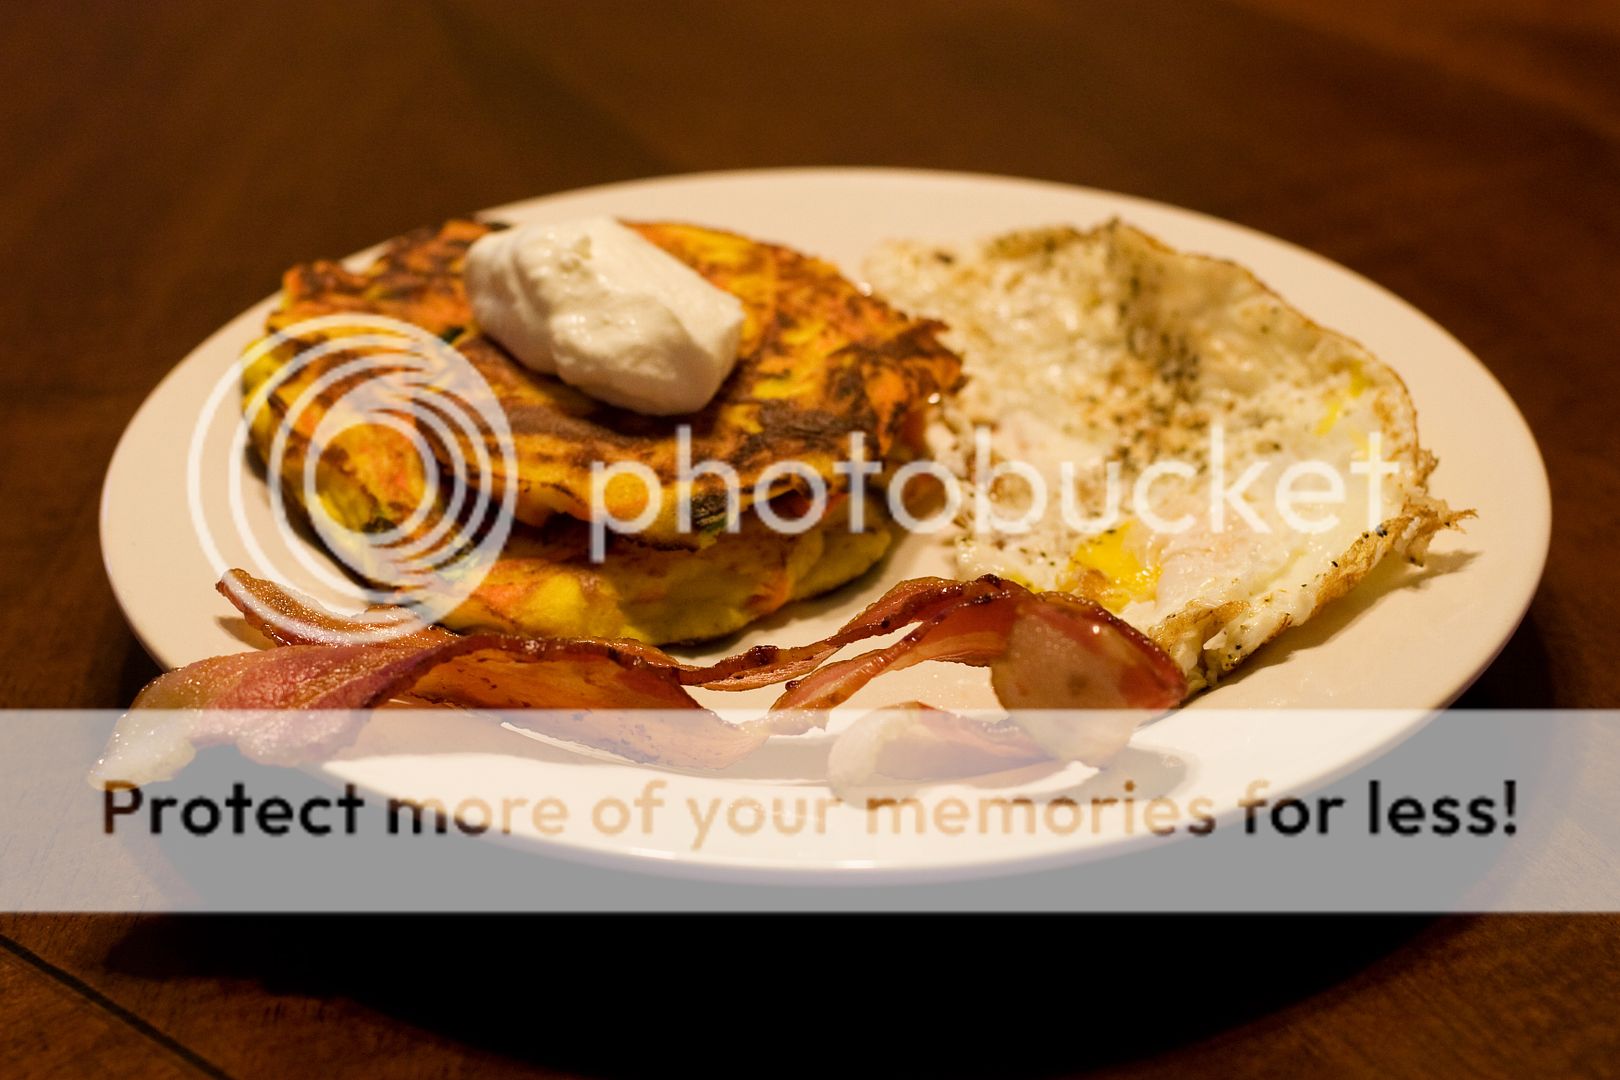 Bacon, Egg, and Savory Vegetable Pancakes topped with Greek yogurt